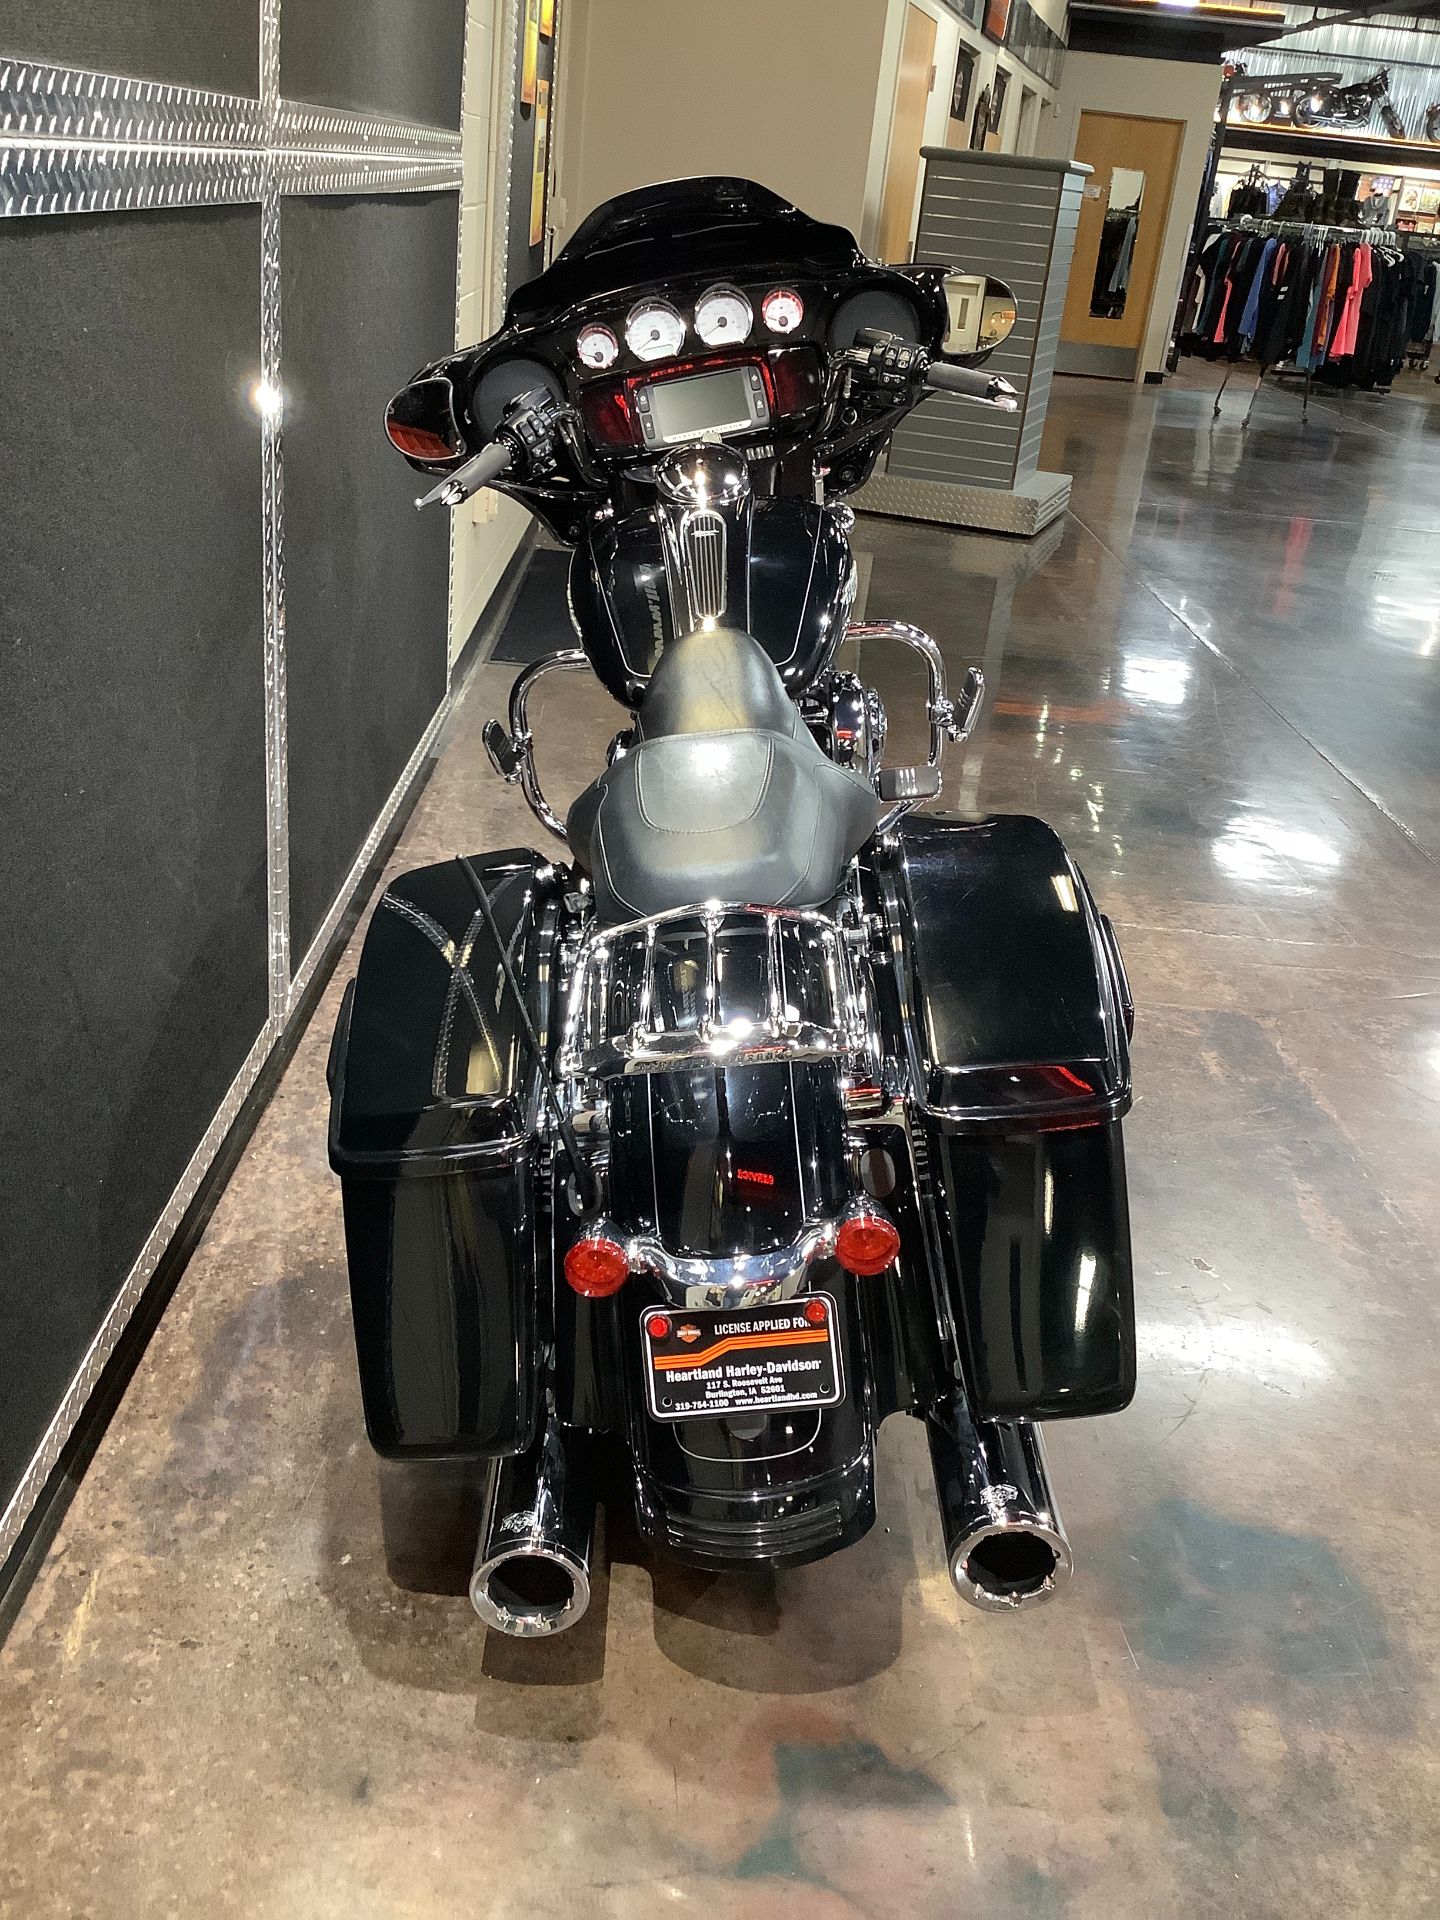 2014 Harley-Davidson Street Glide® Special in Burlington, Iowa - Photo 12